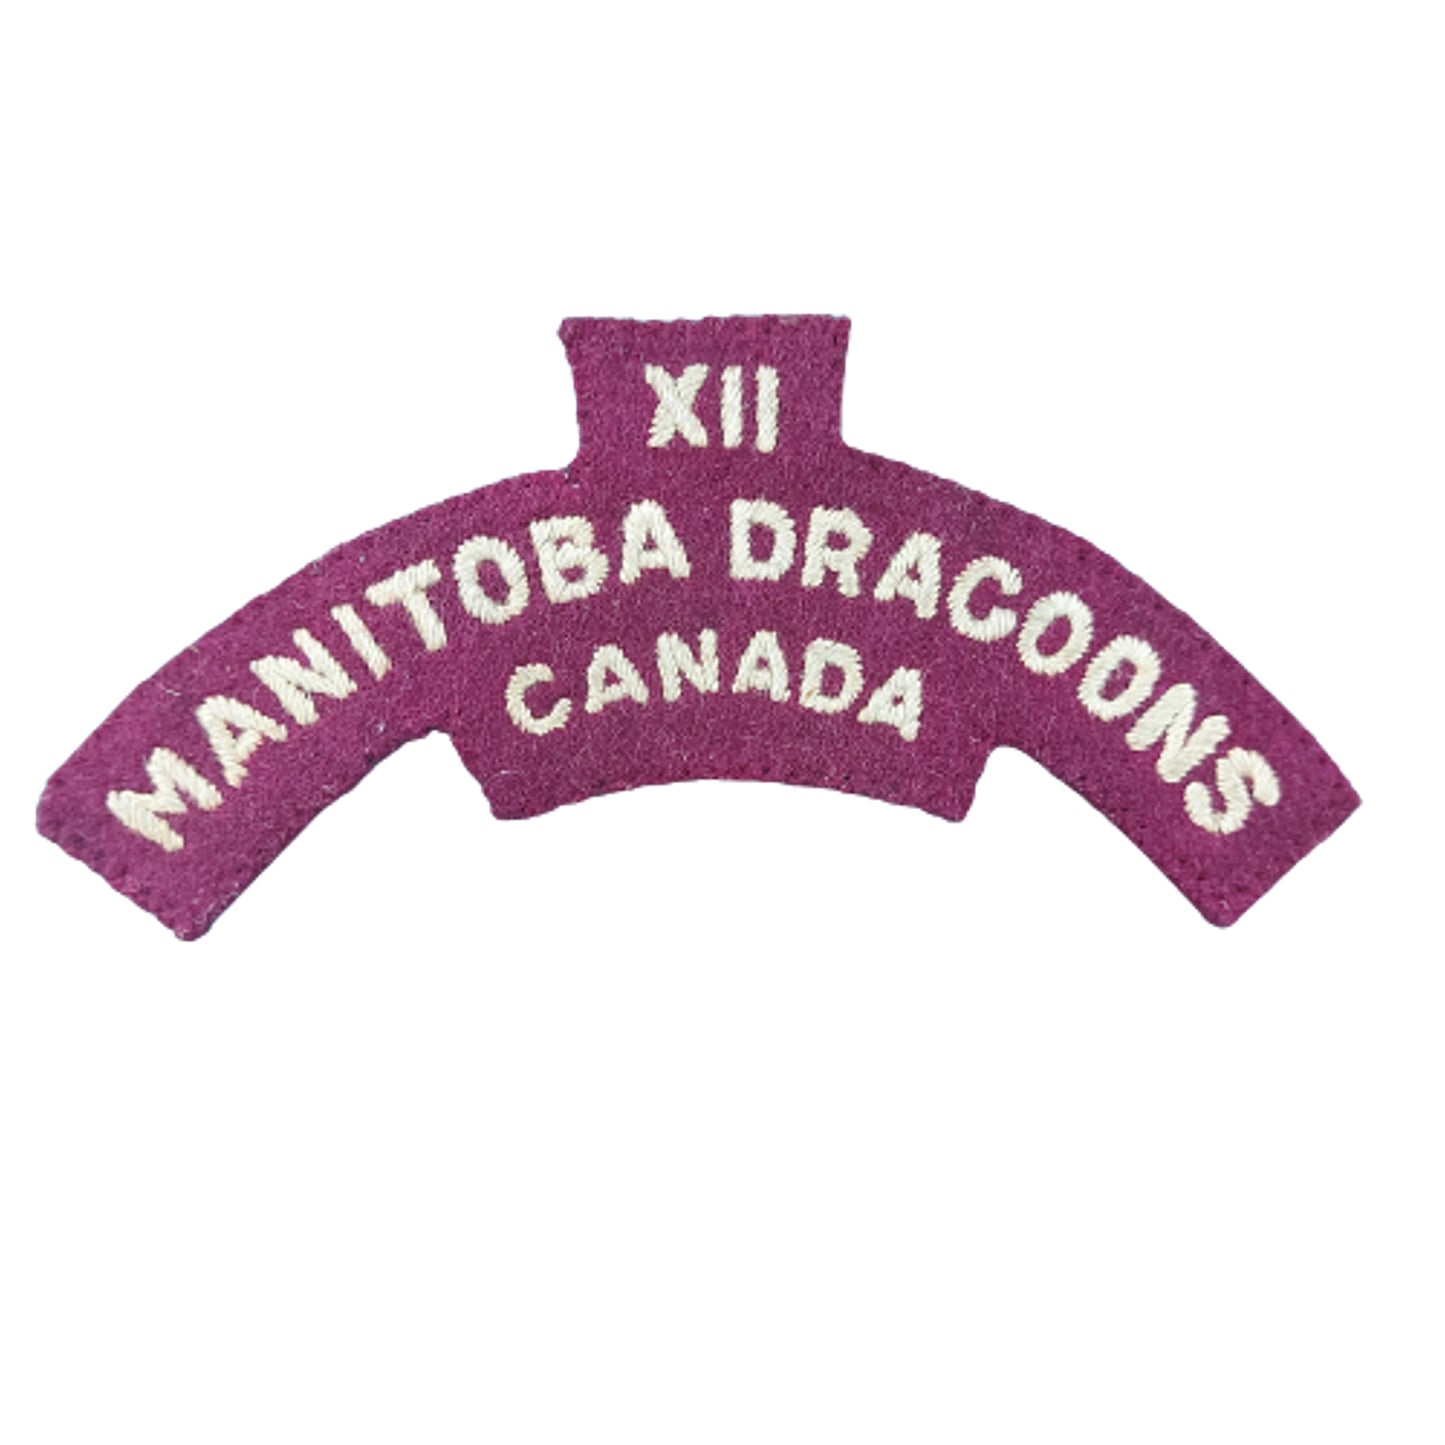 WW2 Canadian 12th Manitoba Dragoons Cloth Shoulder Title